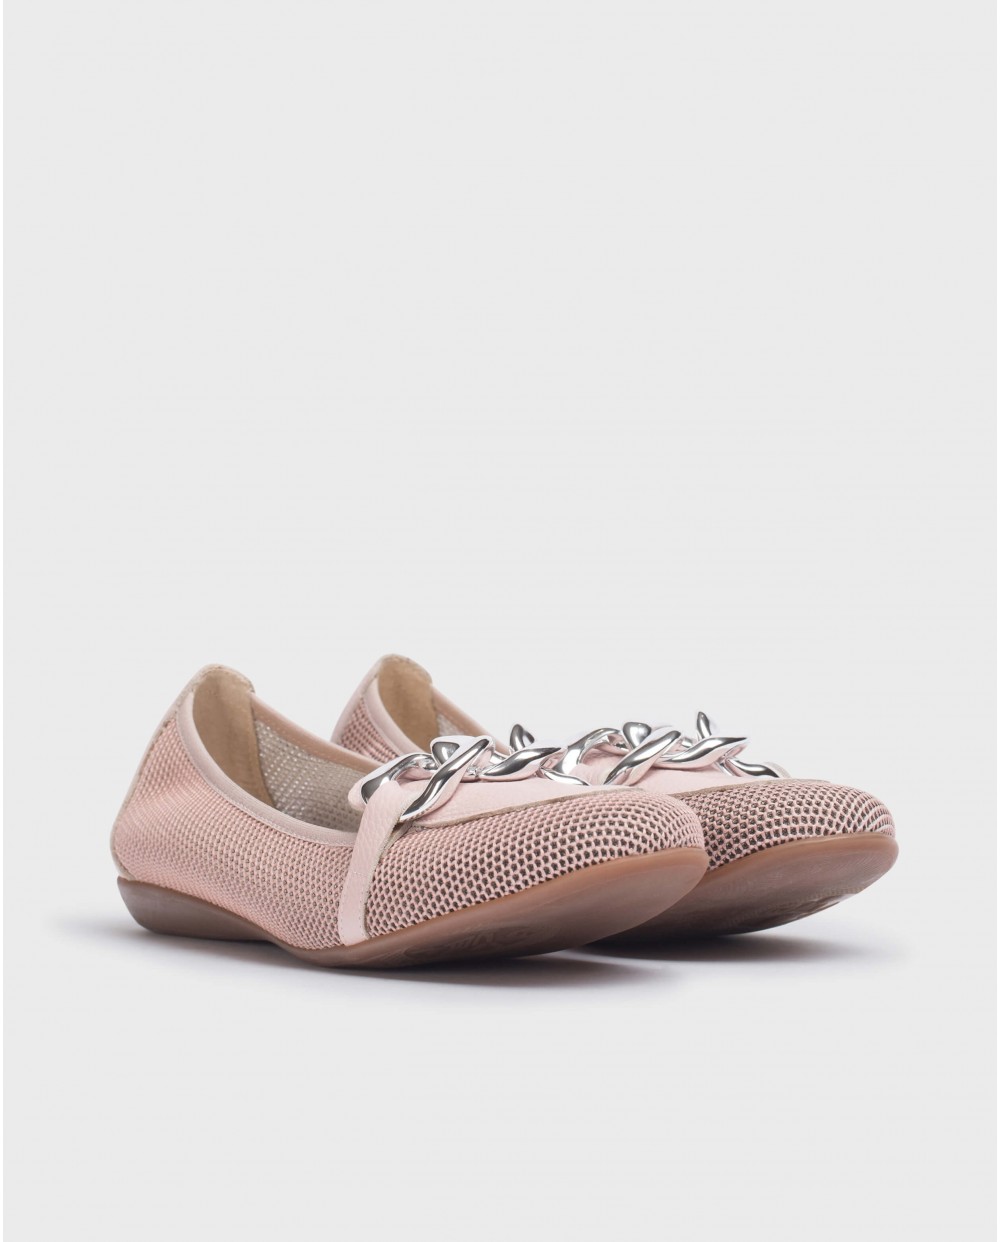 Wonders-Ready to wear-Pink Daisy ballerina